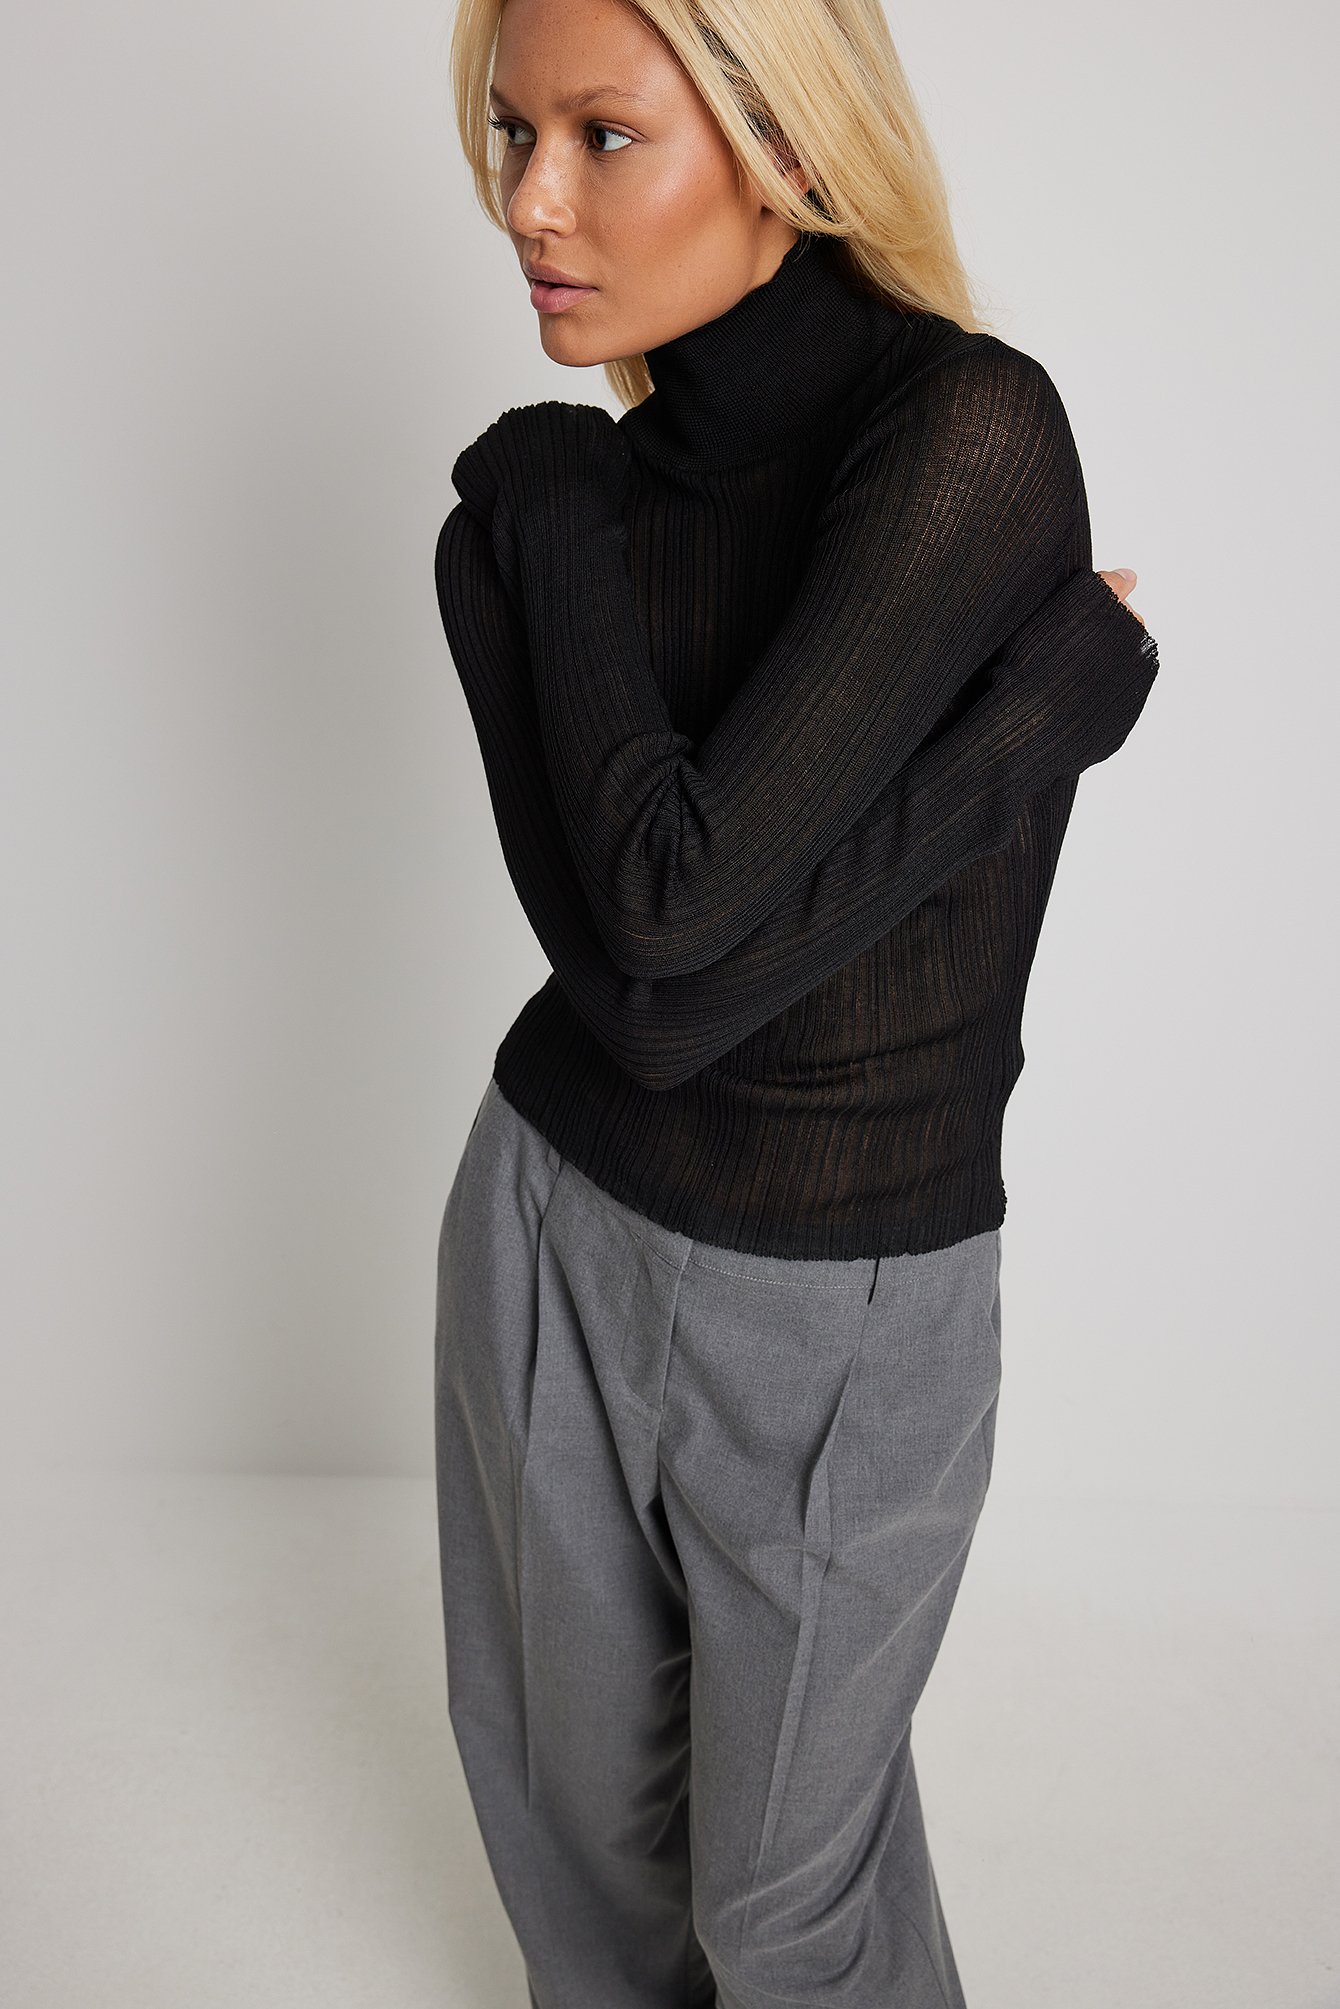 Black Turtleneck Sheer Sweater